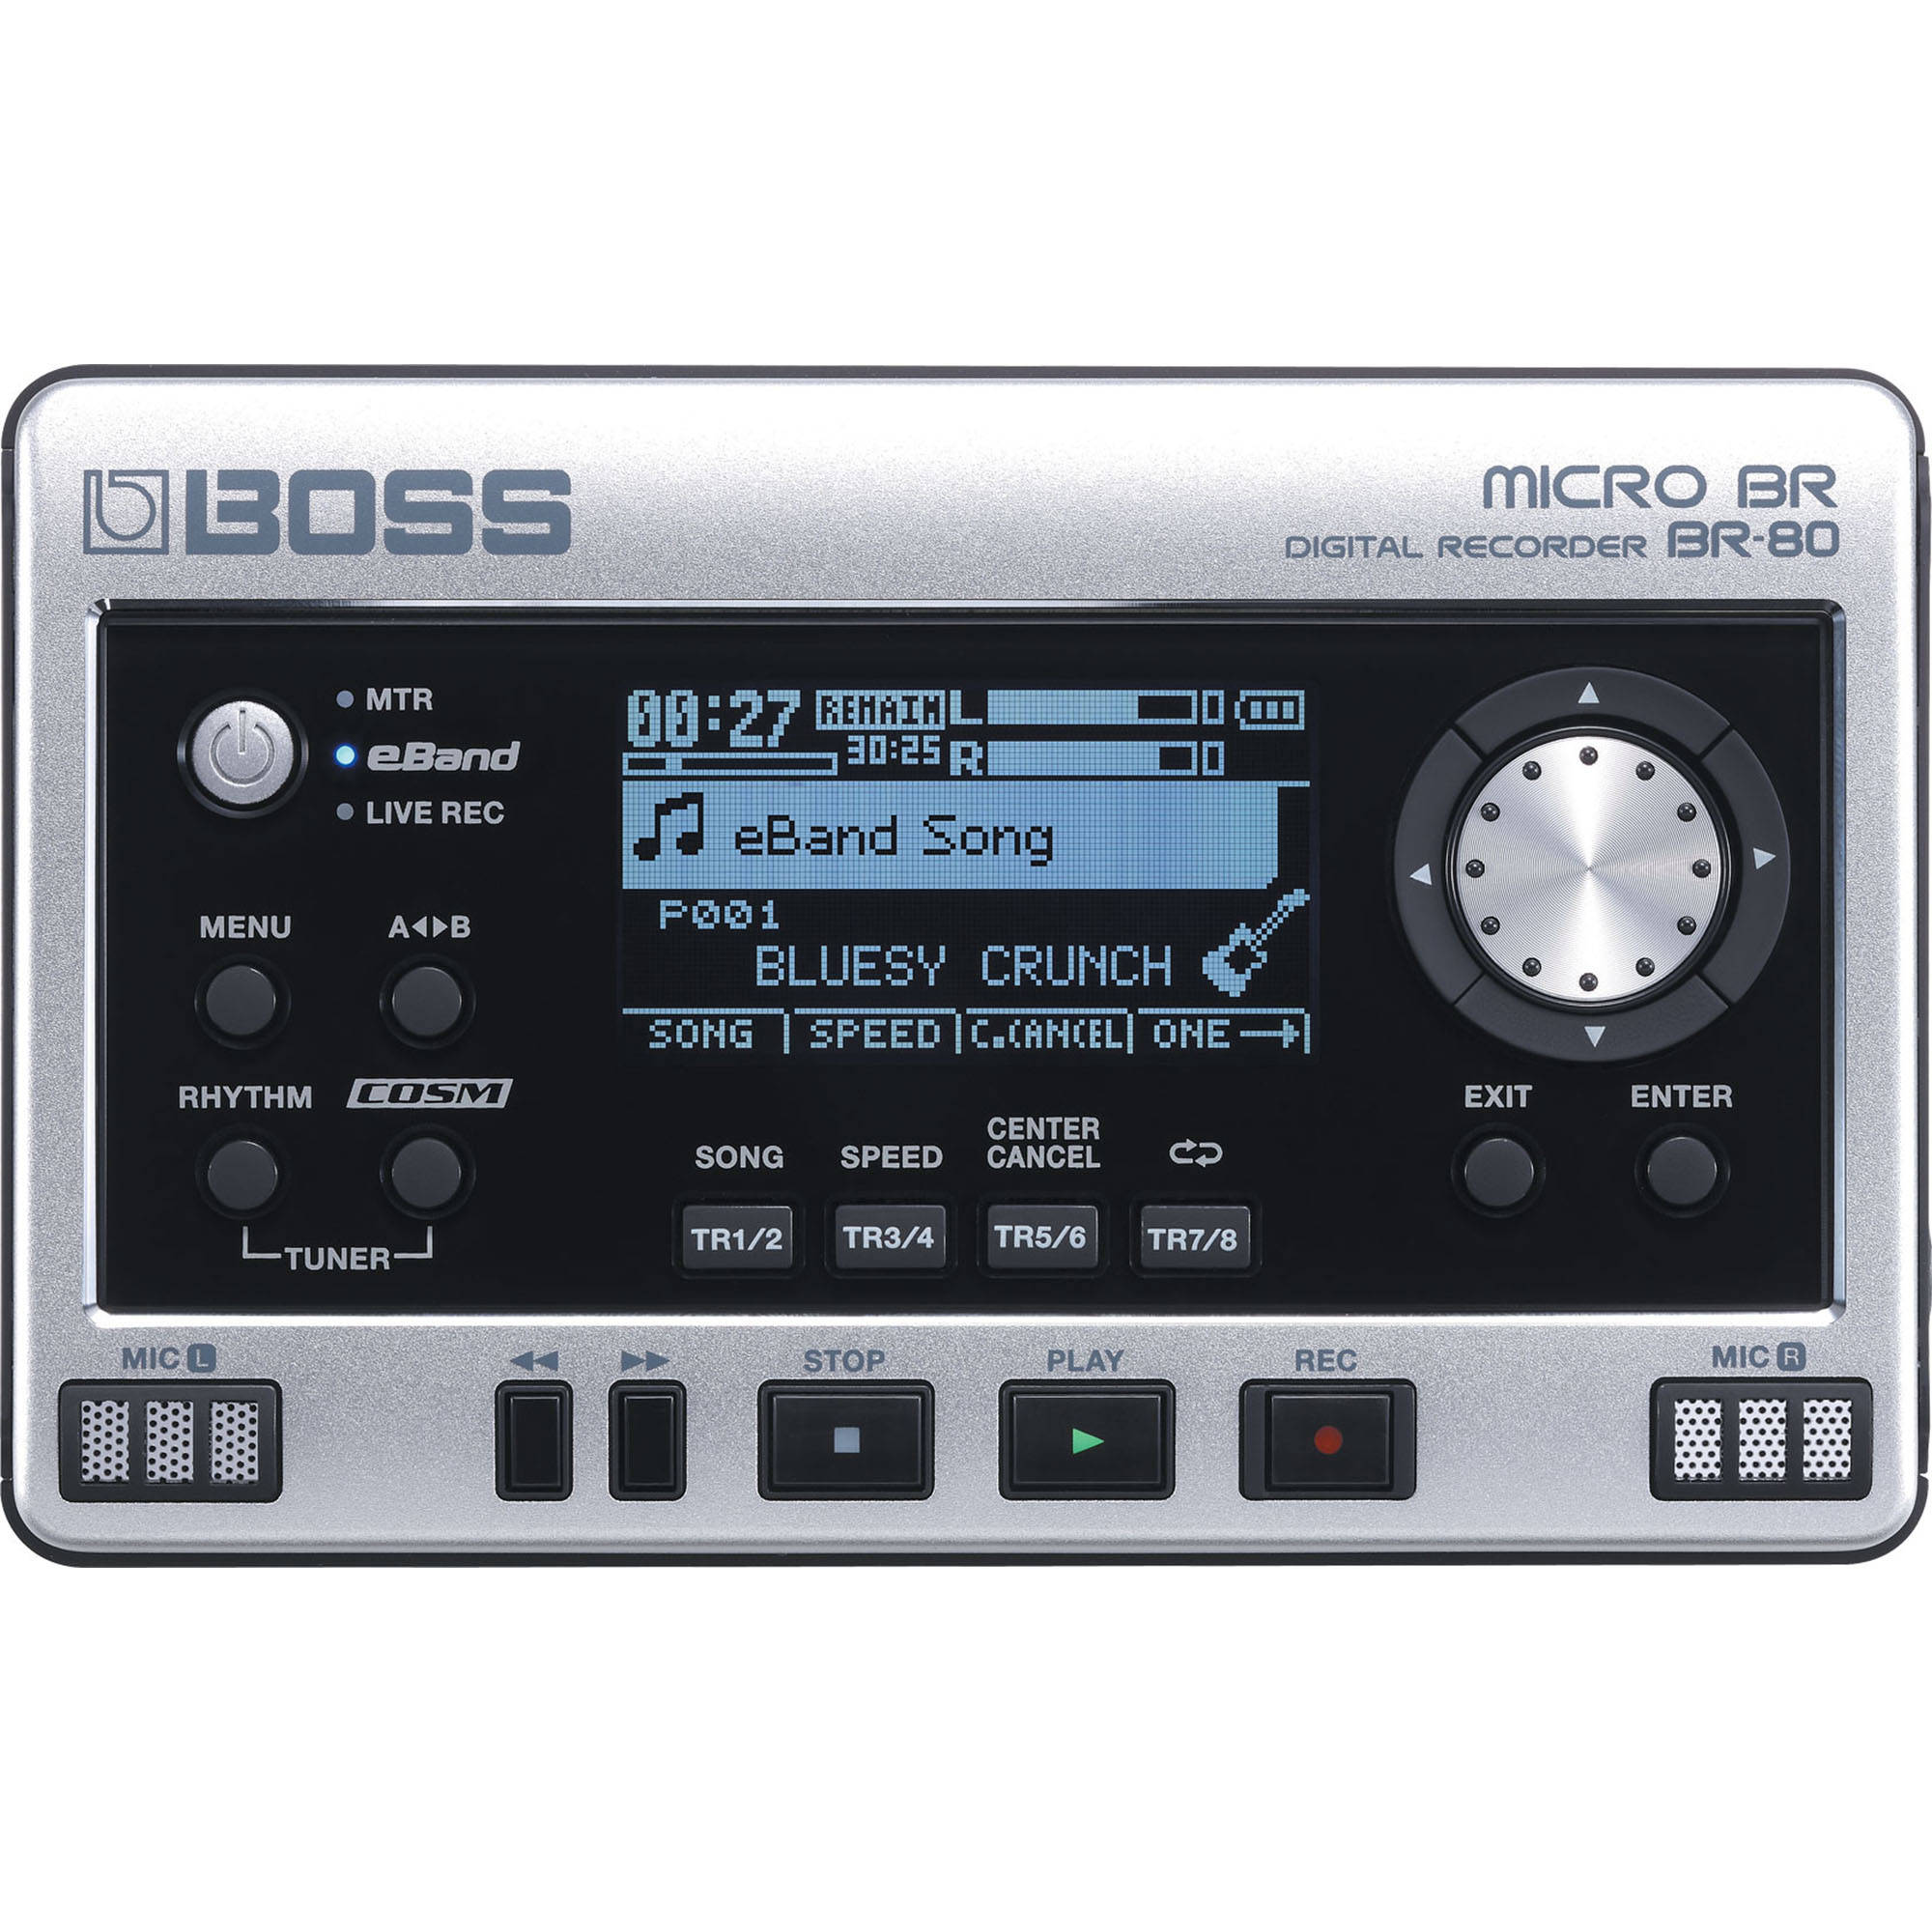 Boss Micro Br Br 80 8 Track Digital Recorder Br 80 B H Photo